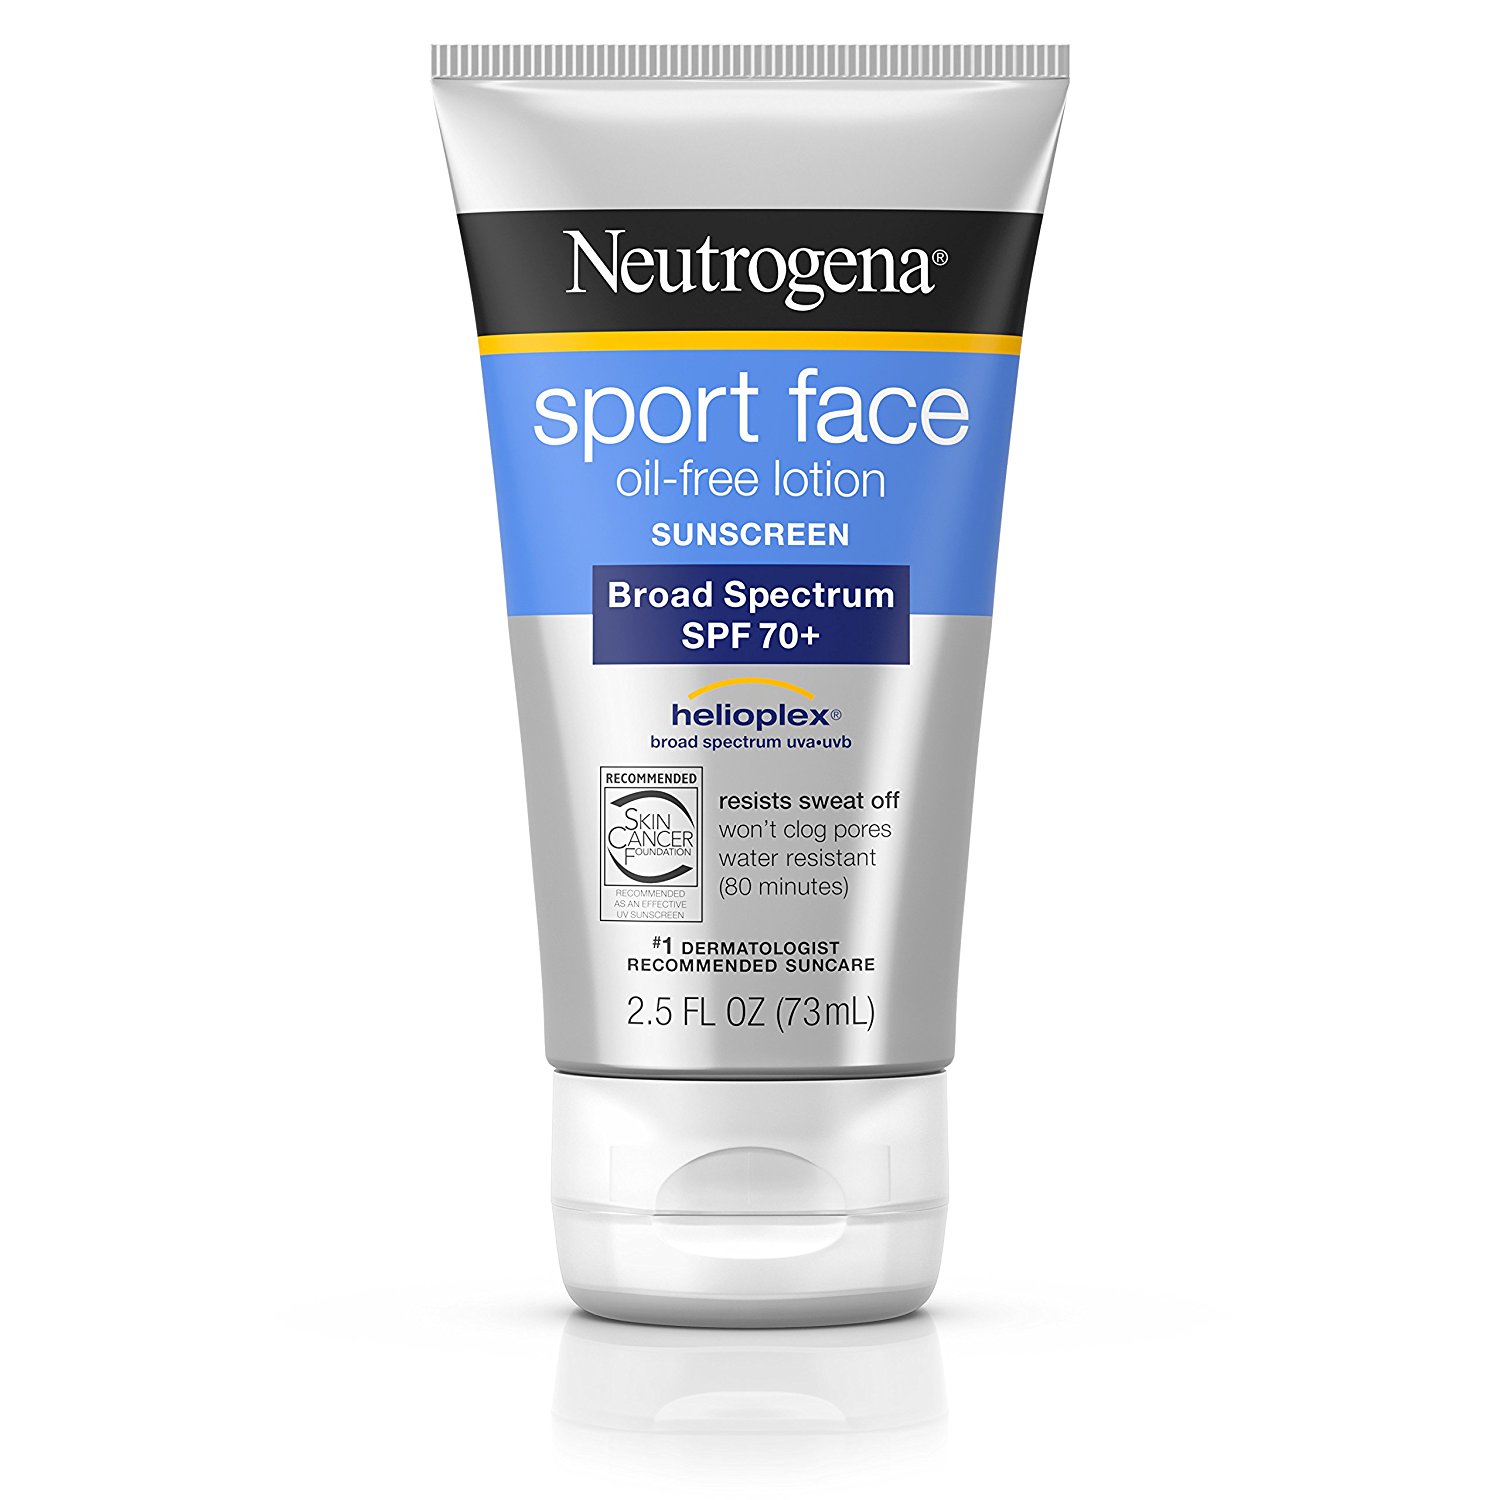 neutrogena oil-free sport face lotion sunscreen